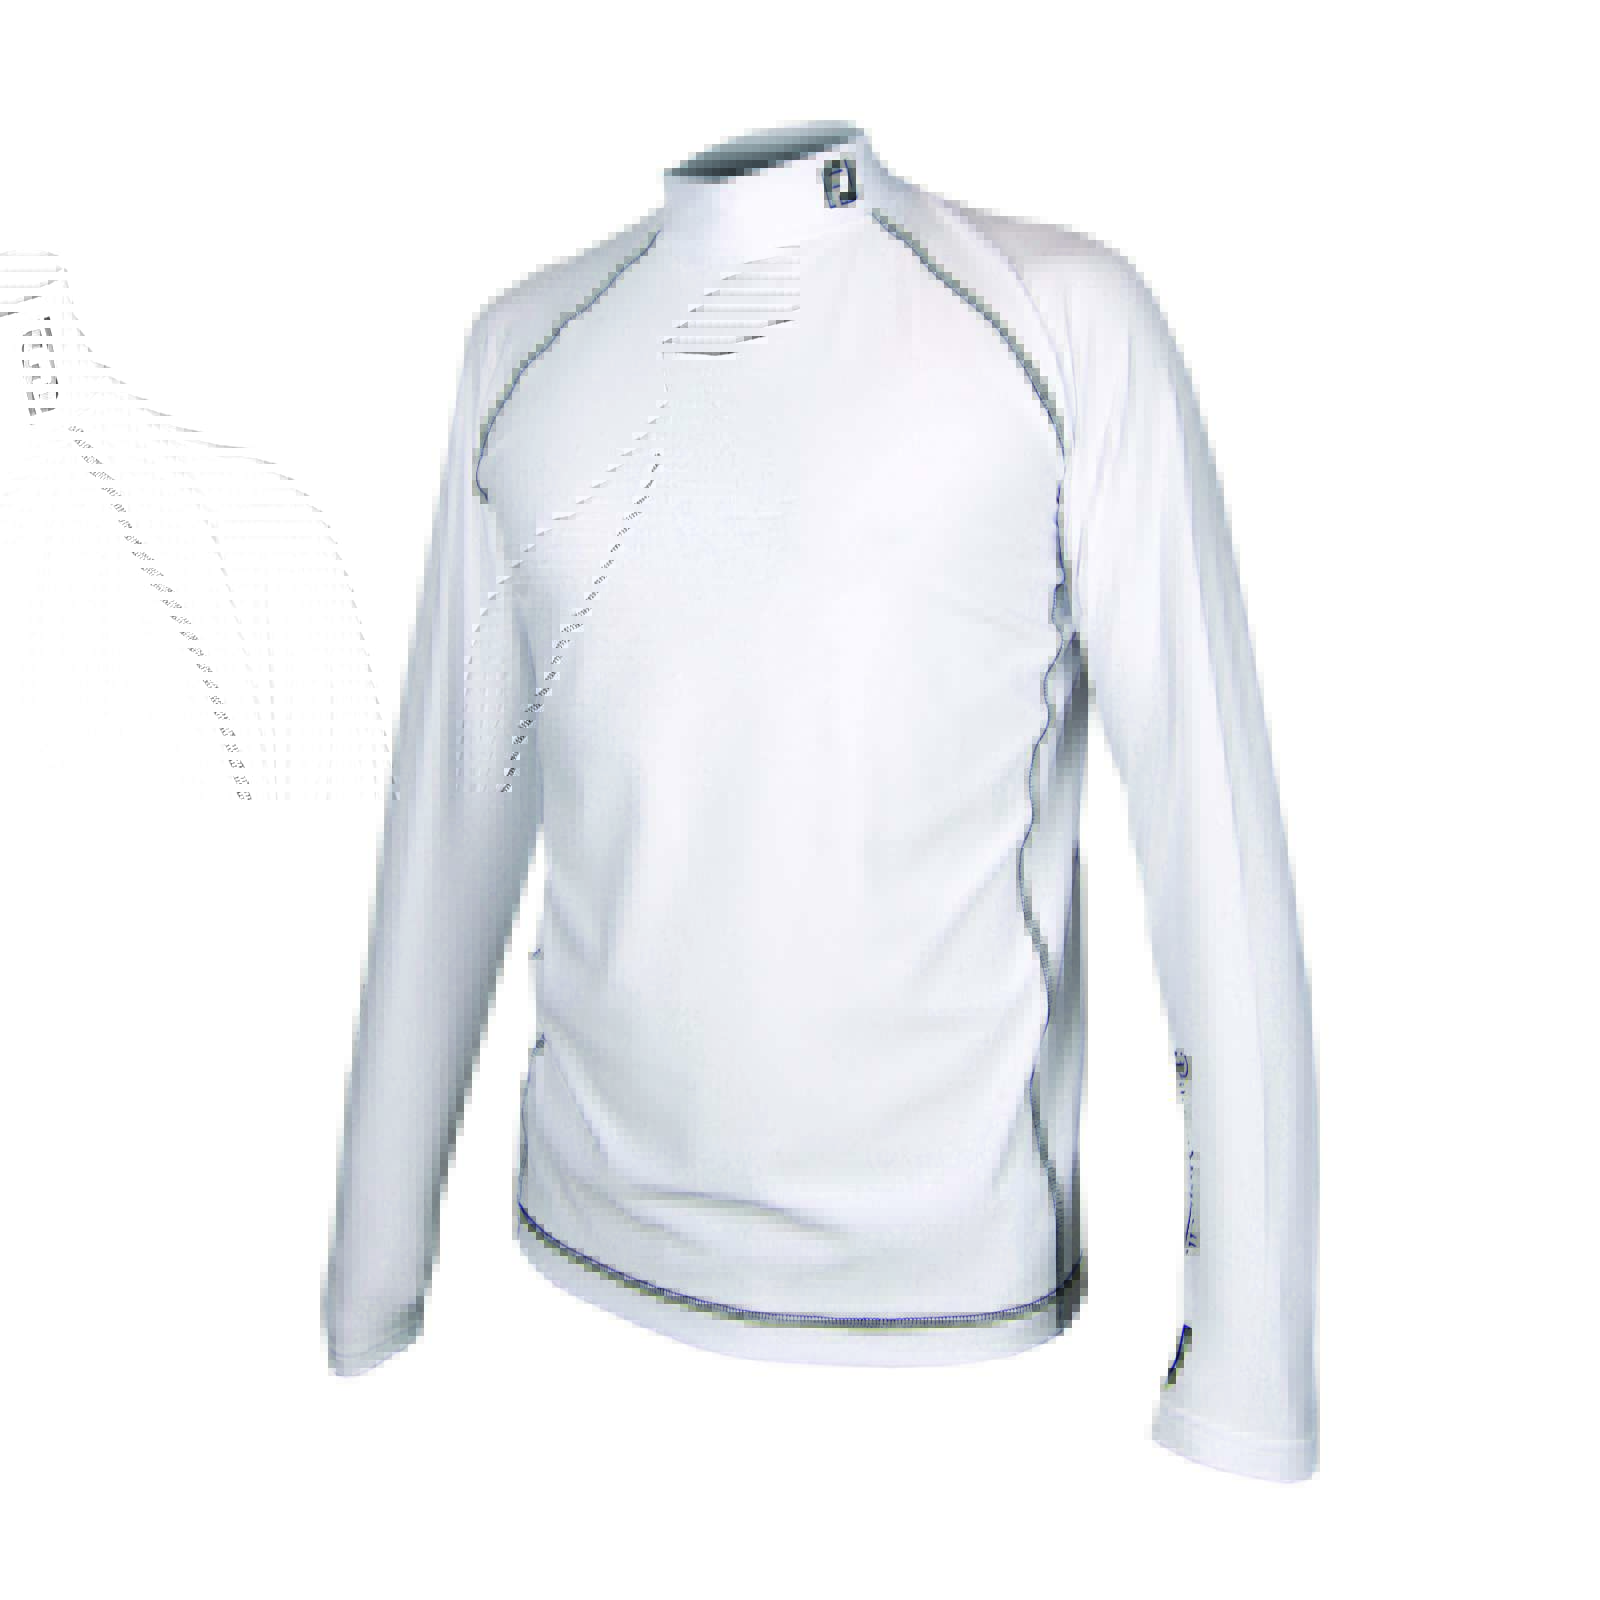 Men's Footjo shirt with long sleeves in white